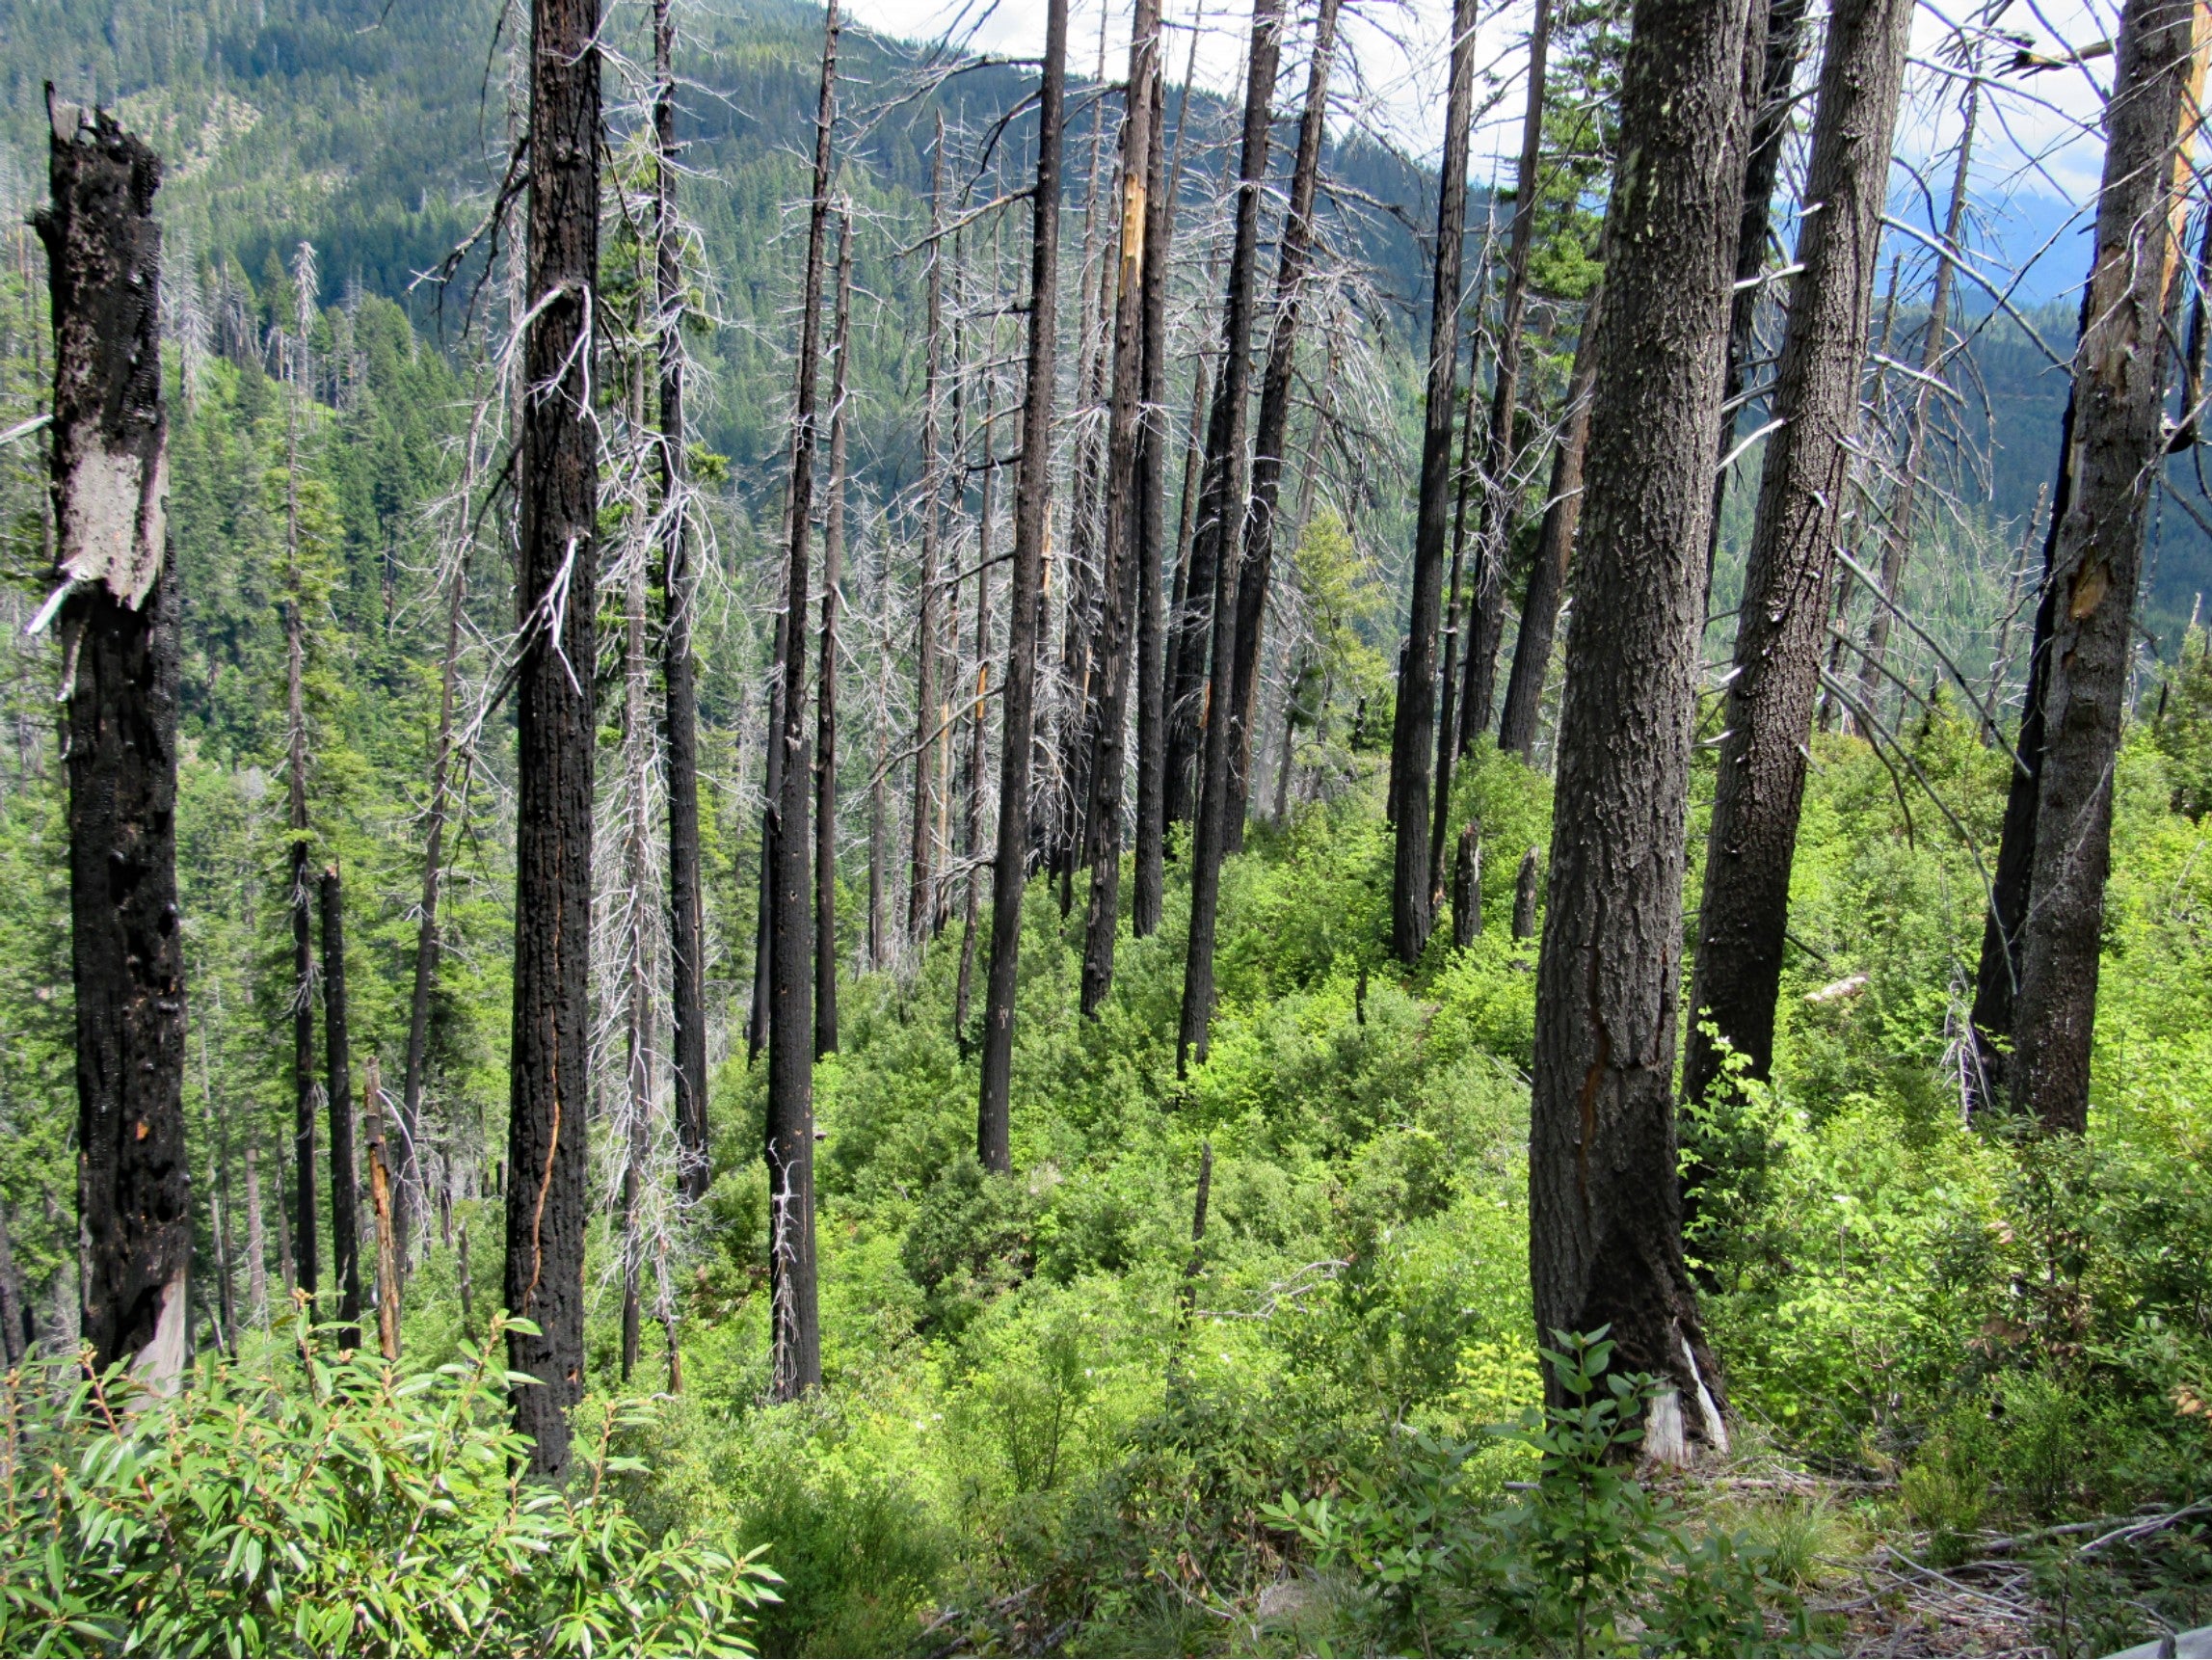 characteristic vegetation pattern following high-severity fire in the Klamath region